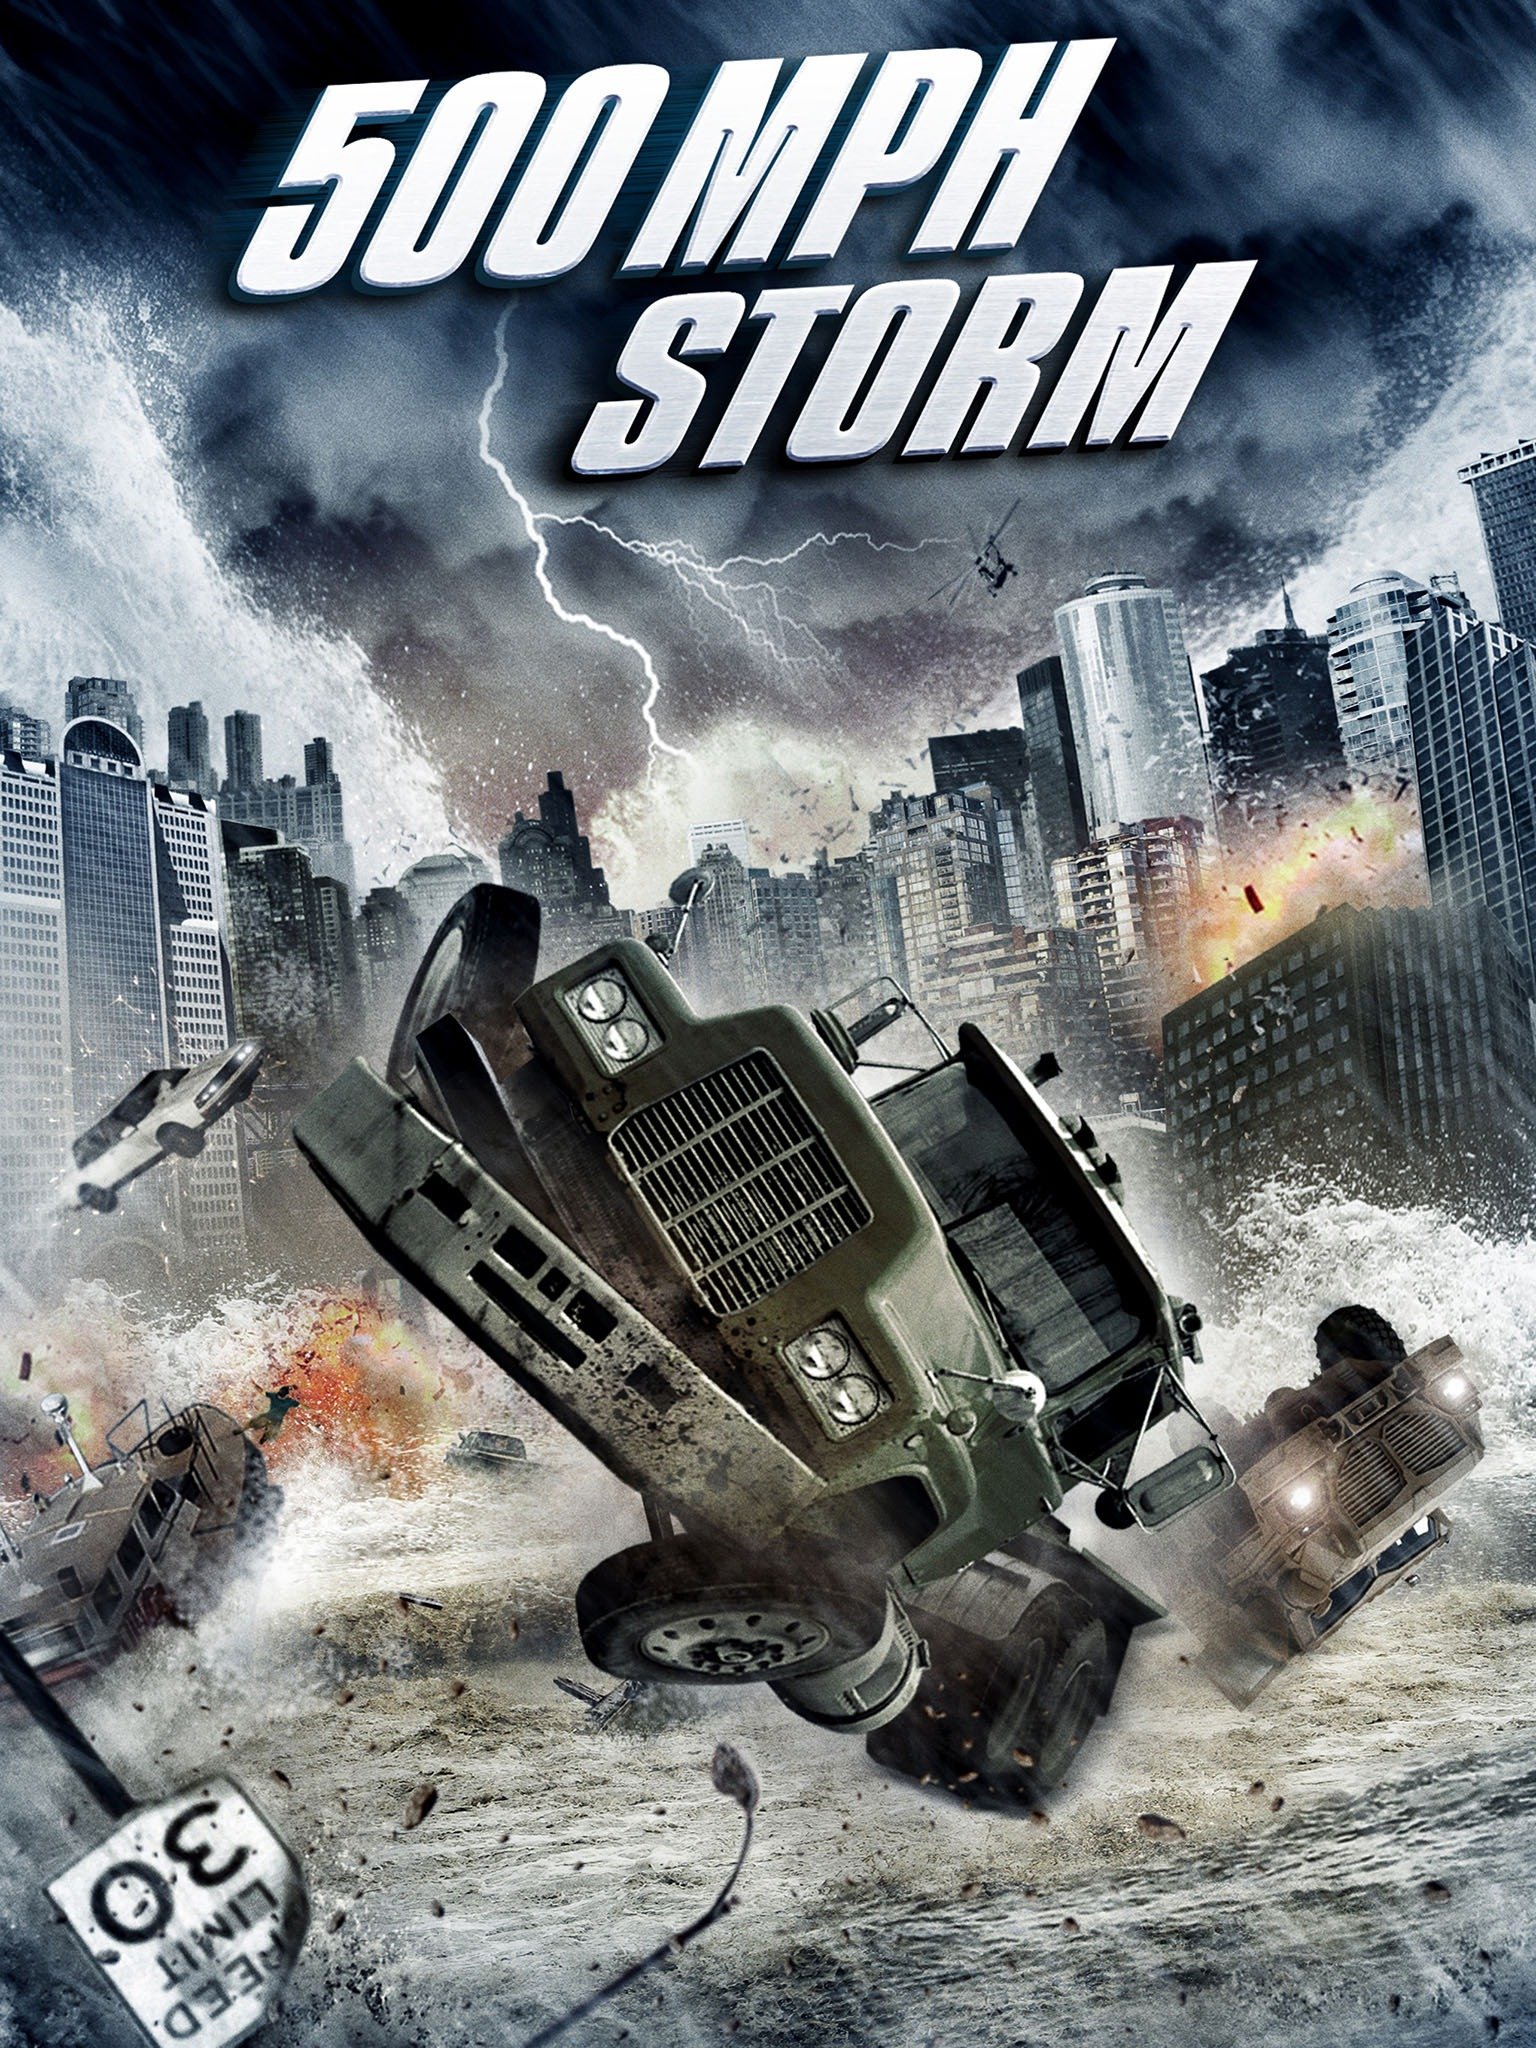 500 Mph Storm Movie Reviews